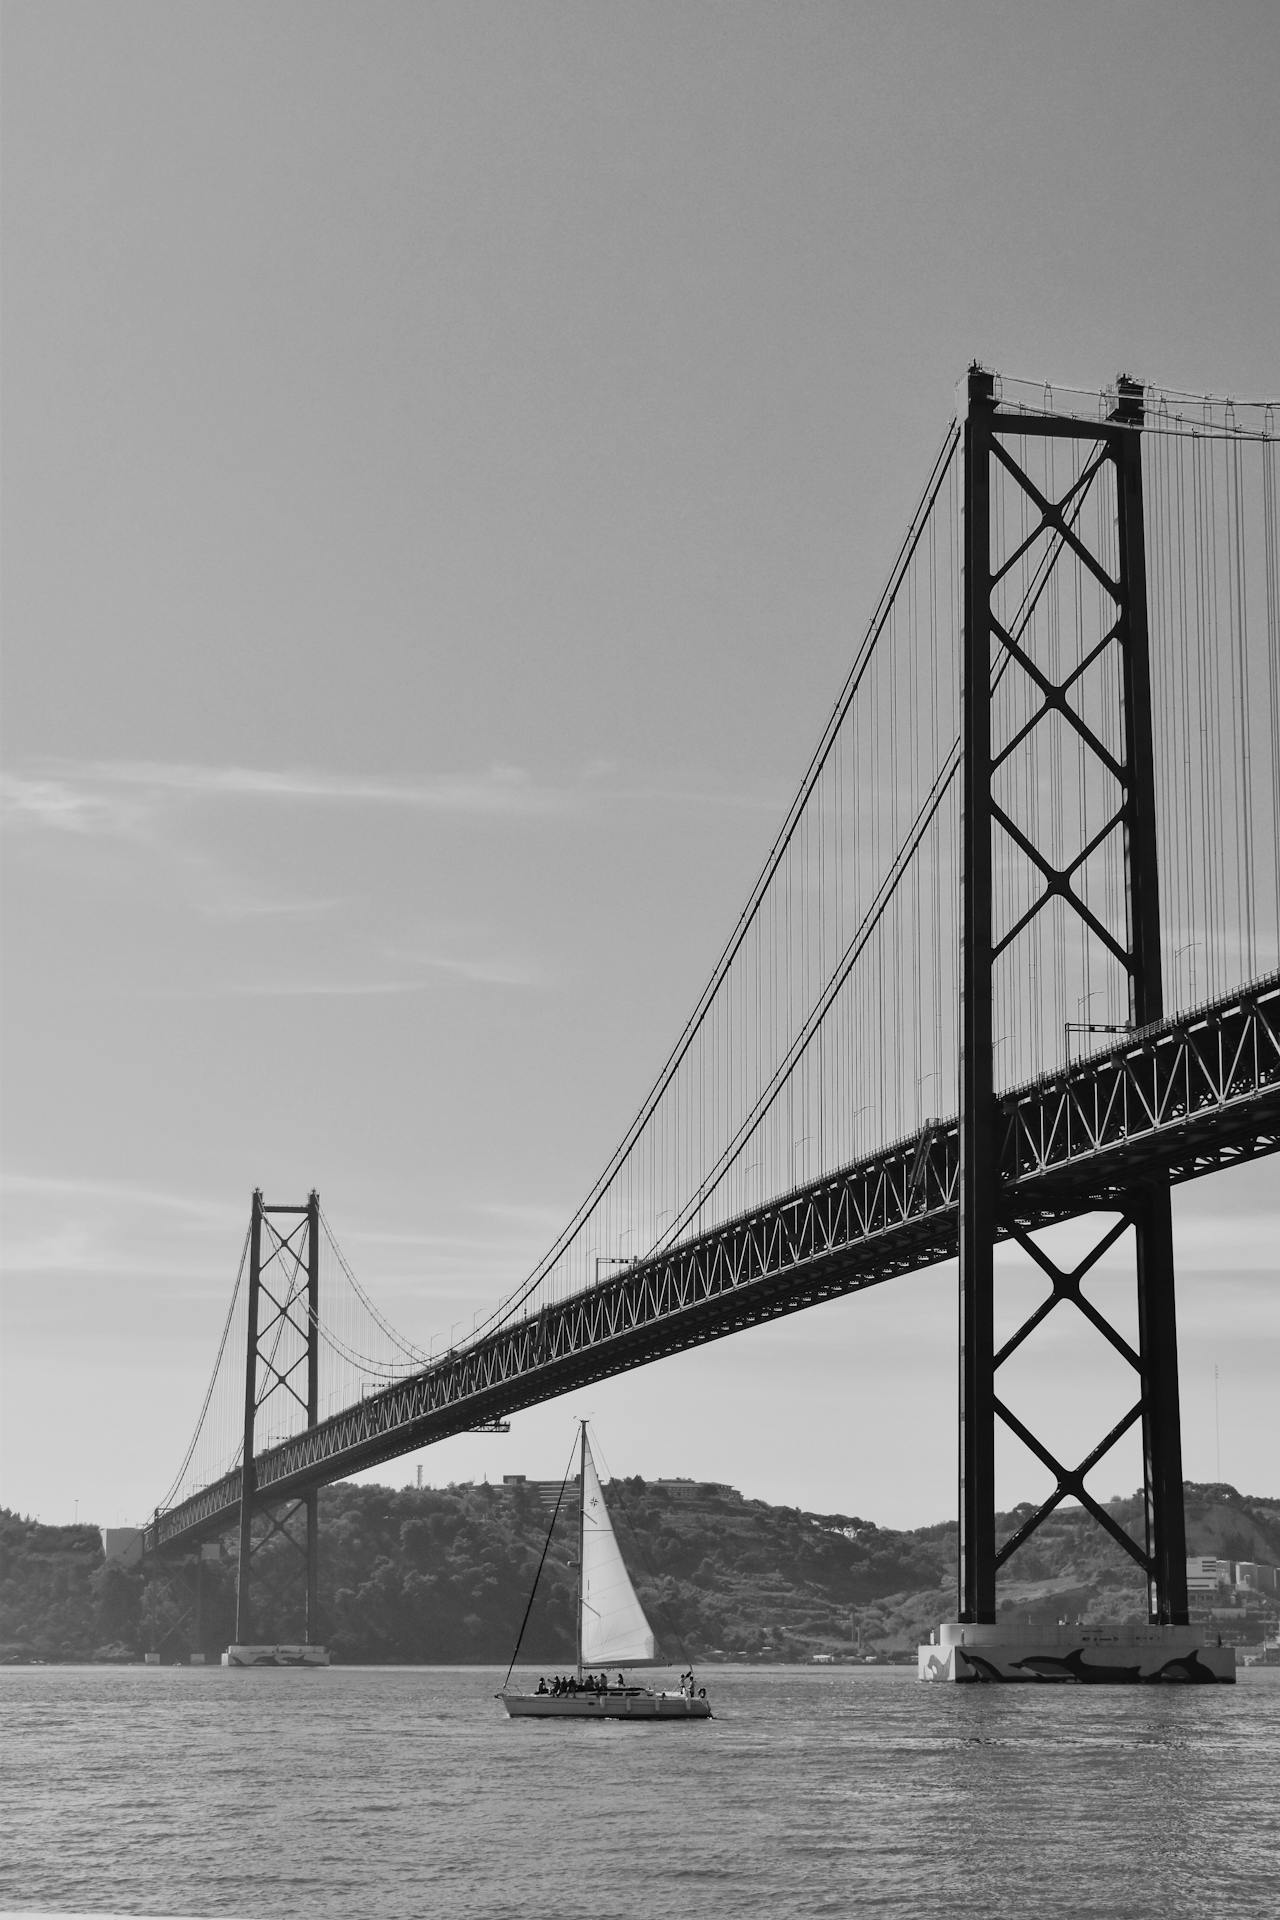 A sailboat sailing under a bridge in Lisbon.